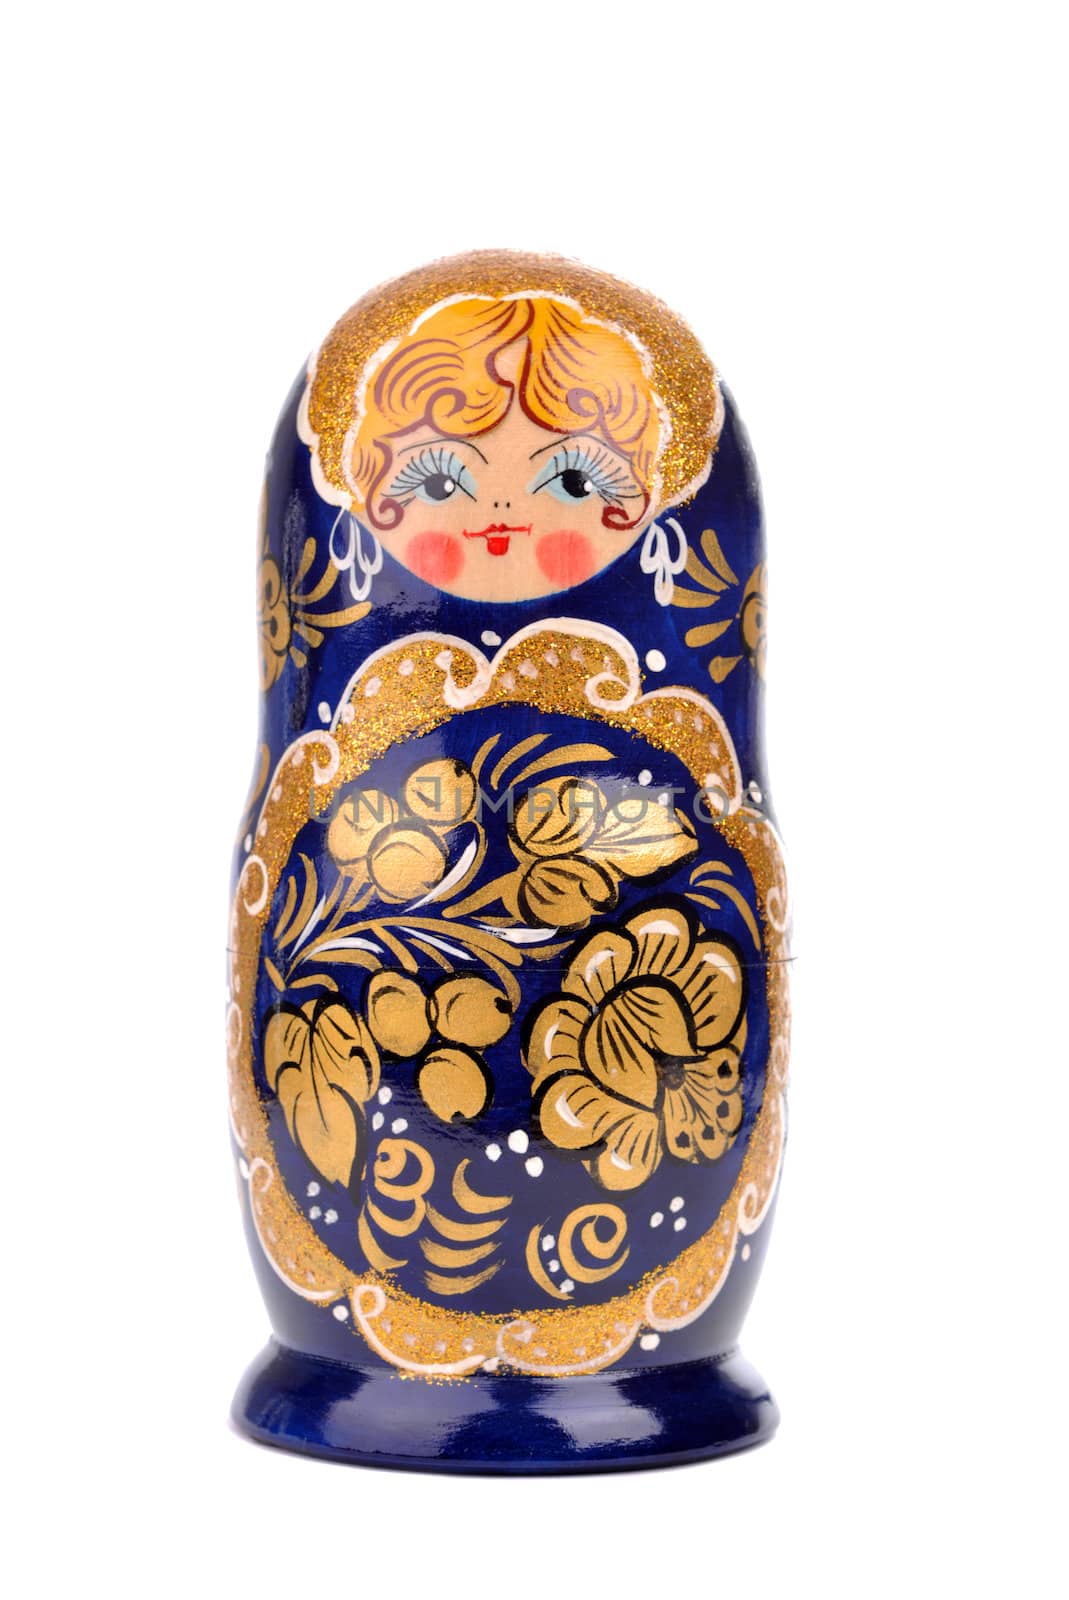 Russian doll by Rainman